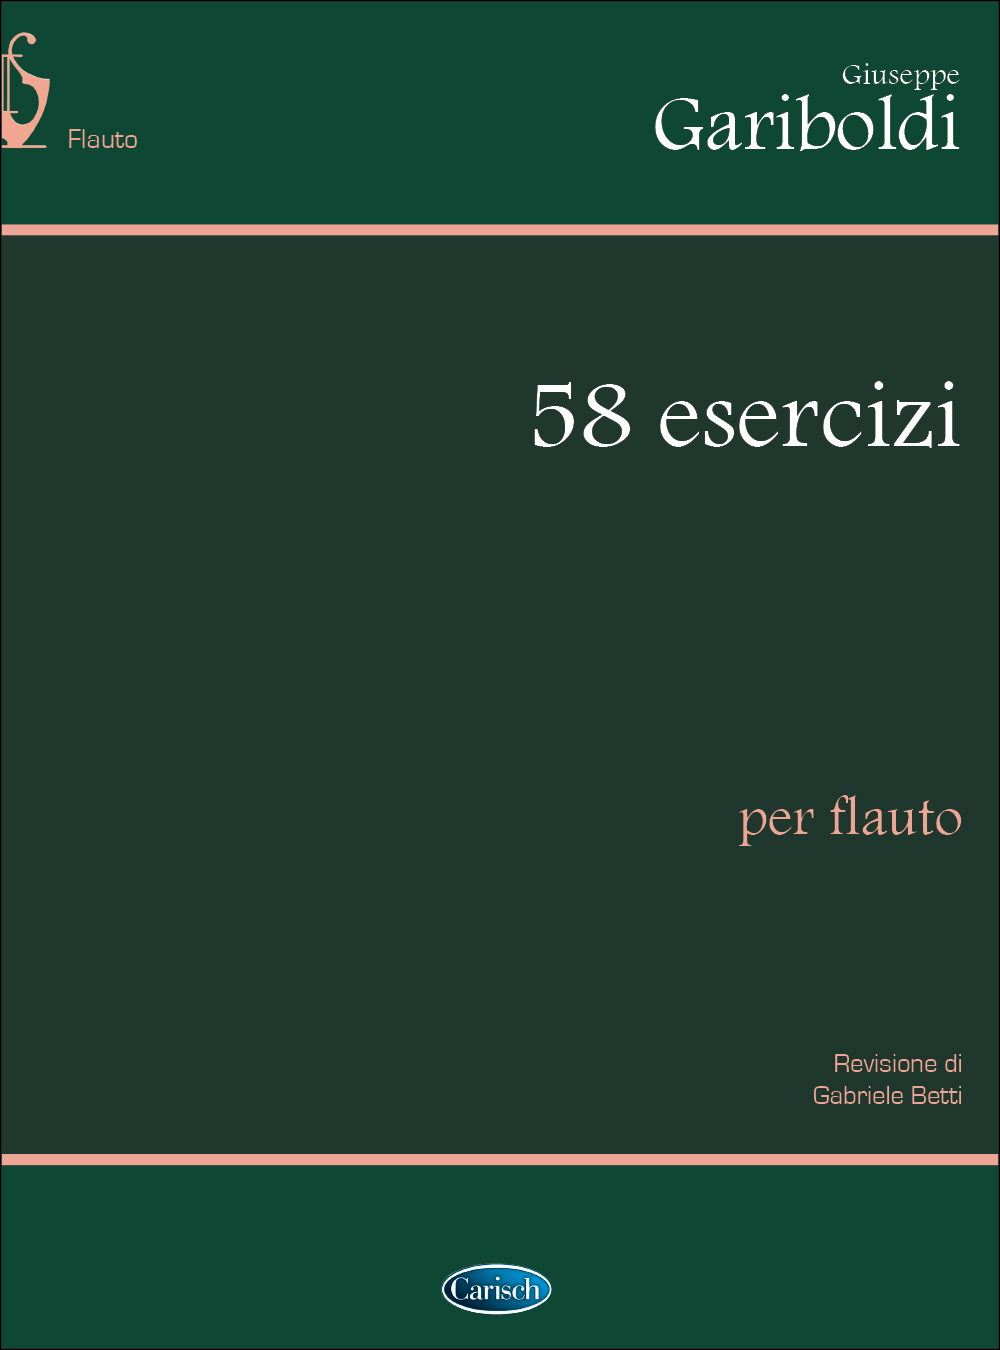 Giuseppe Gariboldi: Esercizi (58) (Betti): Flute: Instrumental Tutor